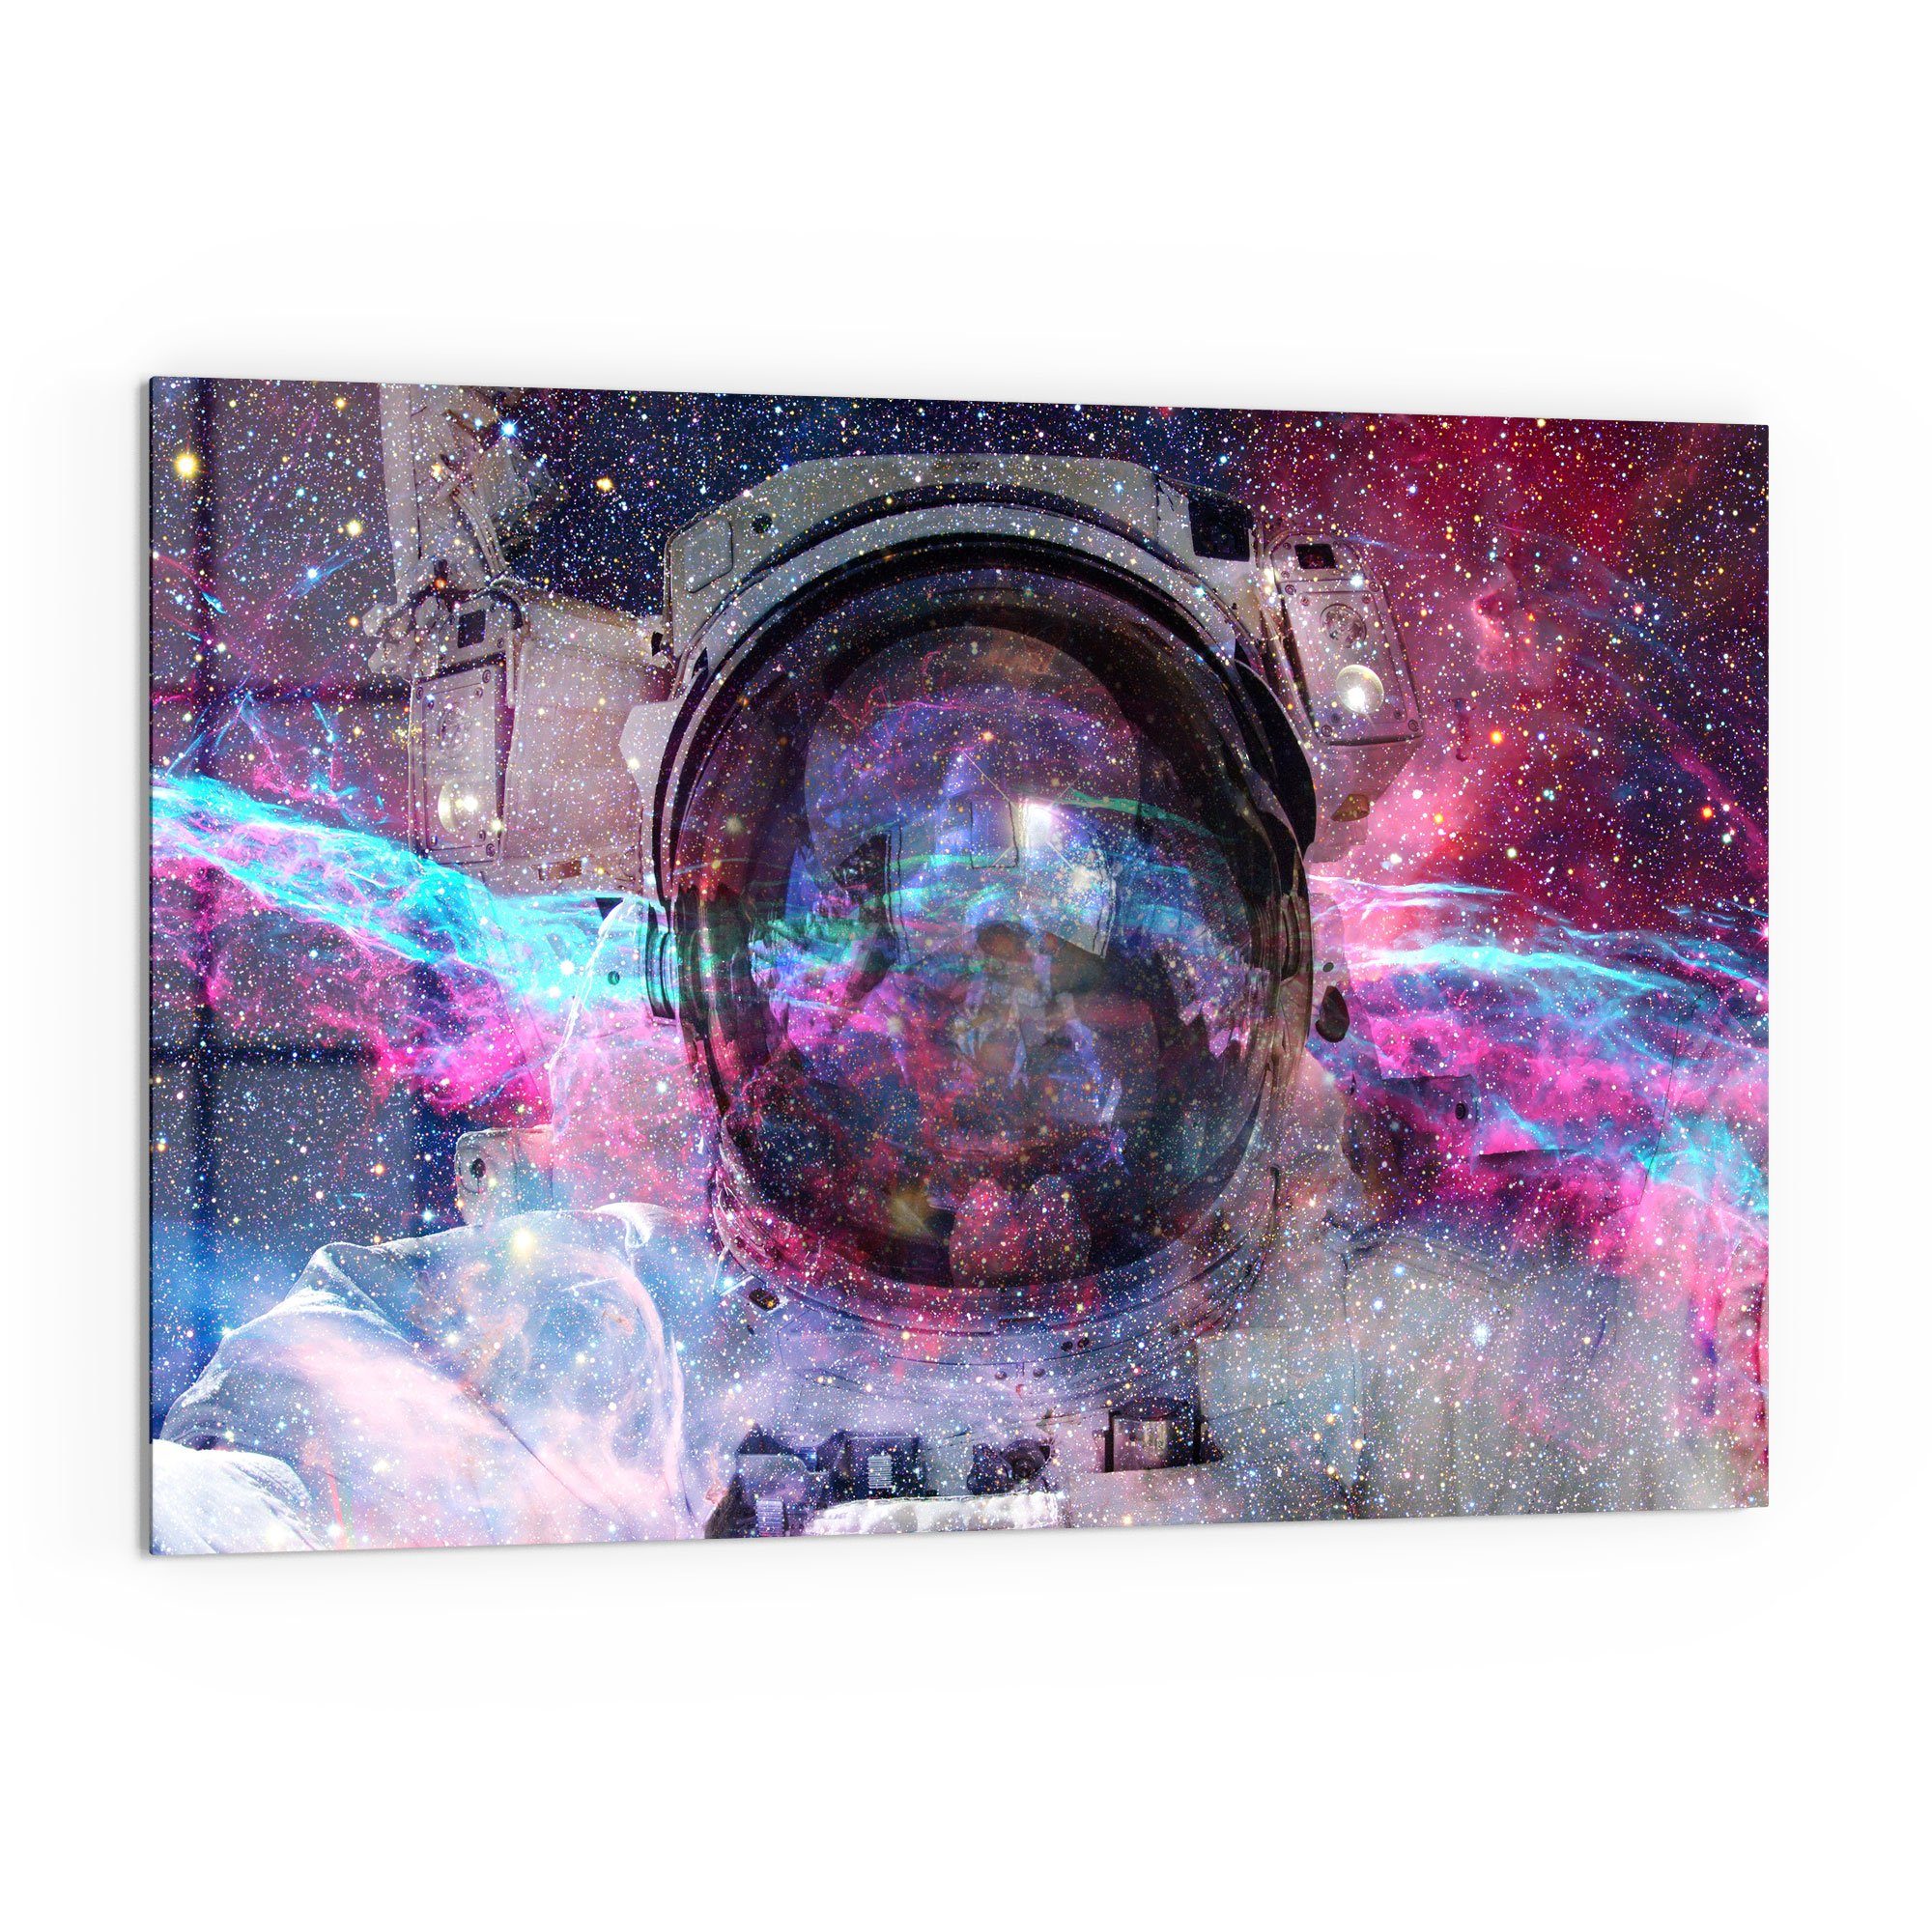 DEQORI 'NASA Badrückwand Küchenrückwand in Nebula', Glas Astronaut Spritzschutz Herdblende